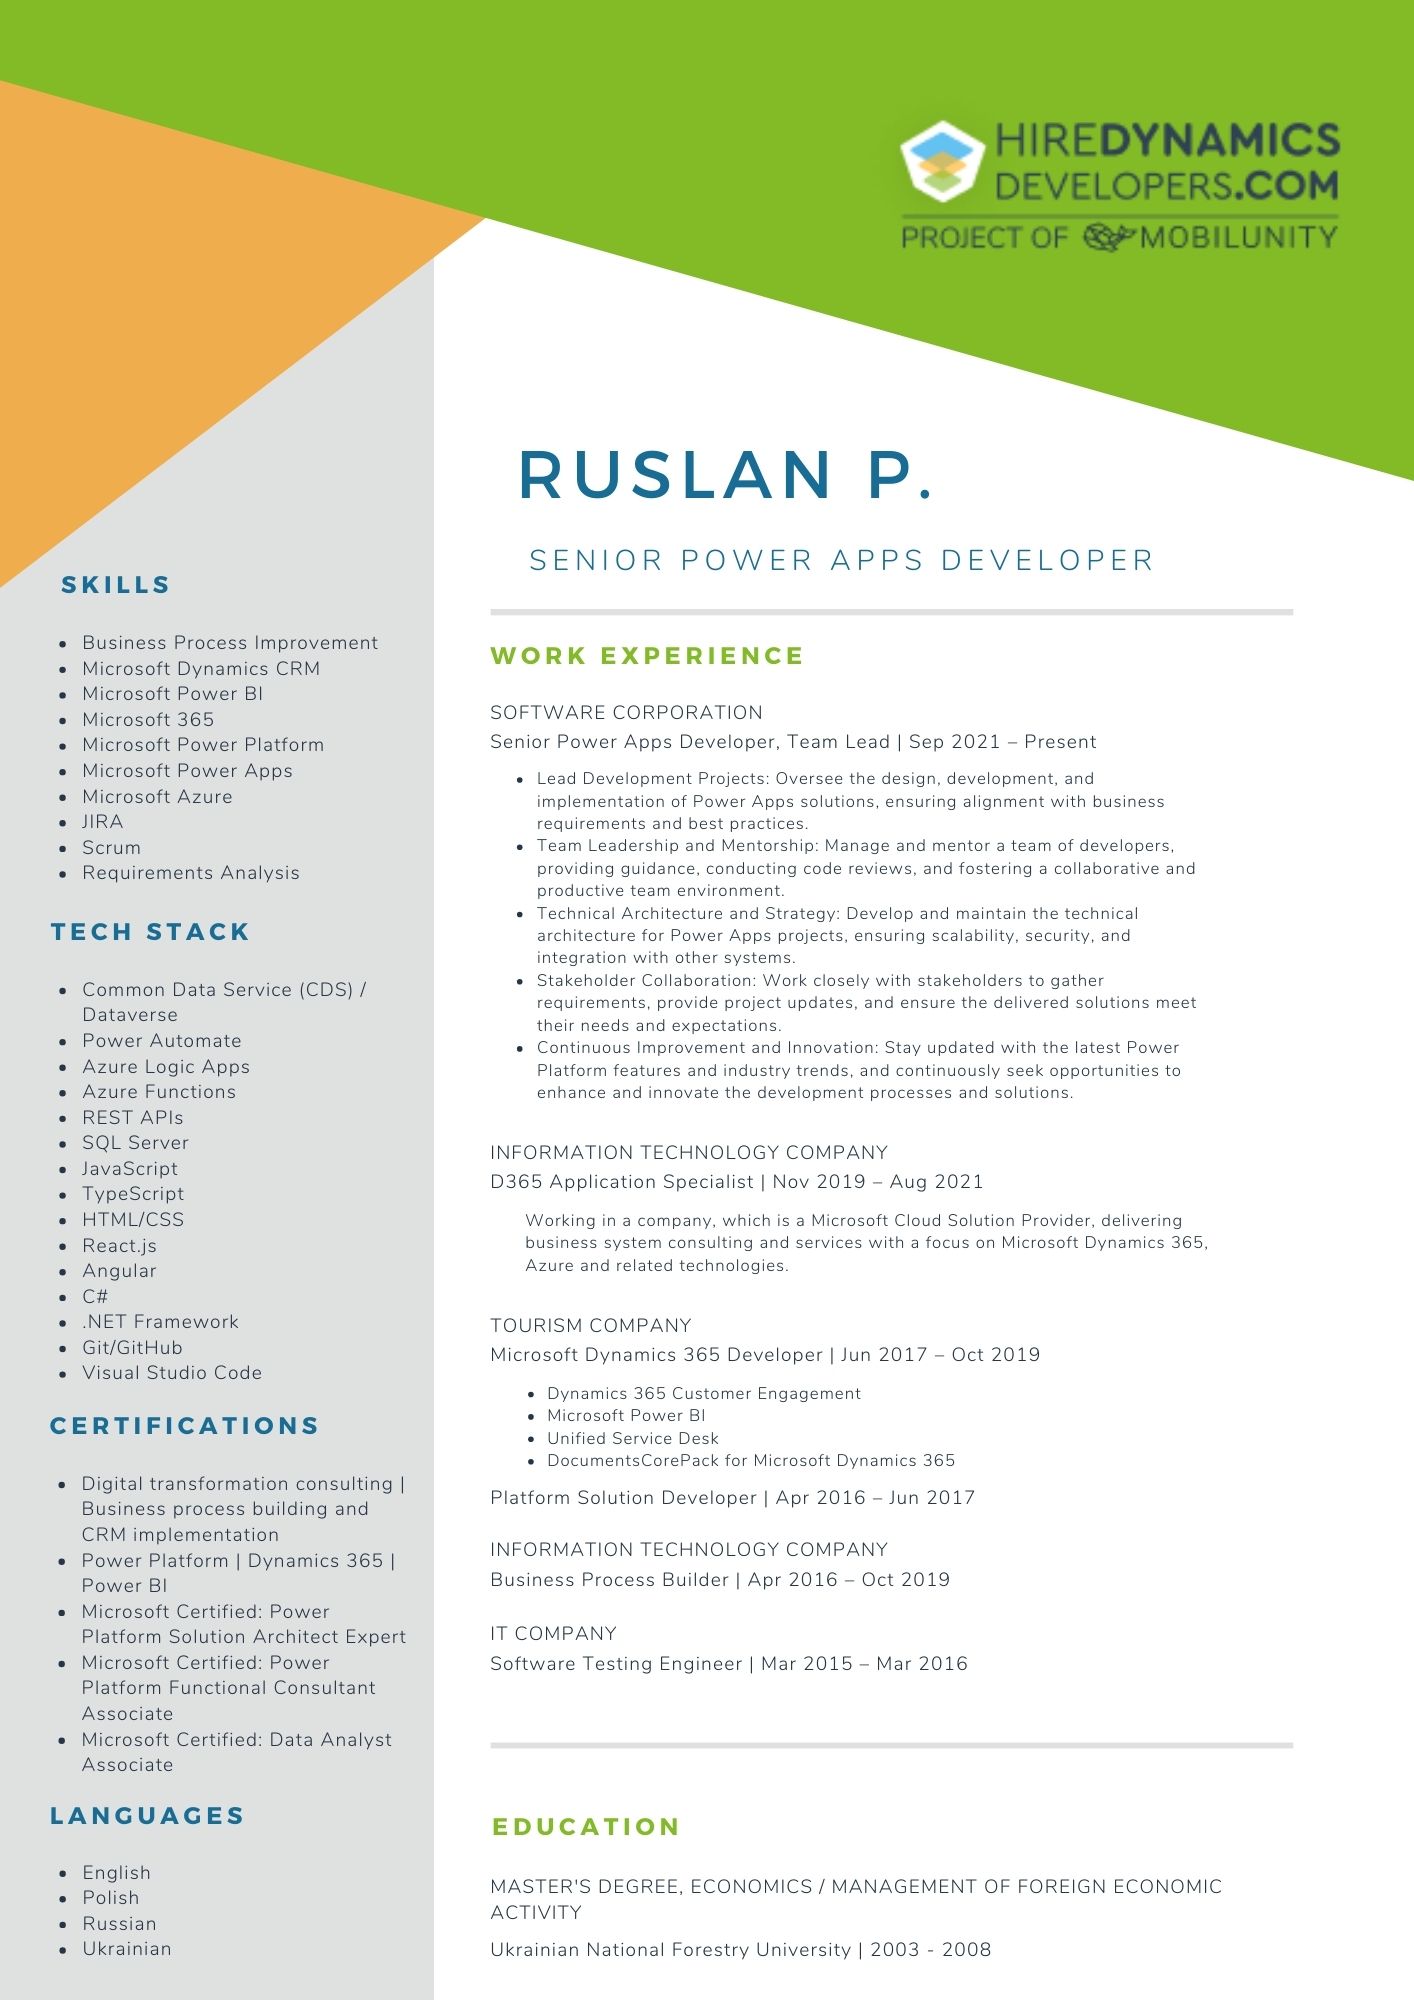 Ruslan P. – Microsoft Power Platform Developer